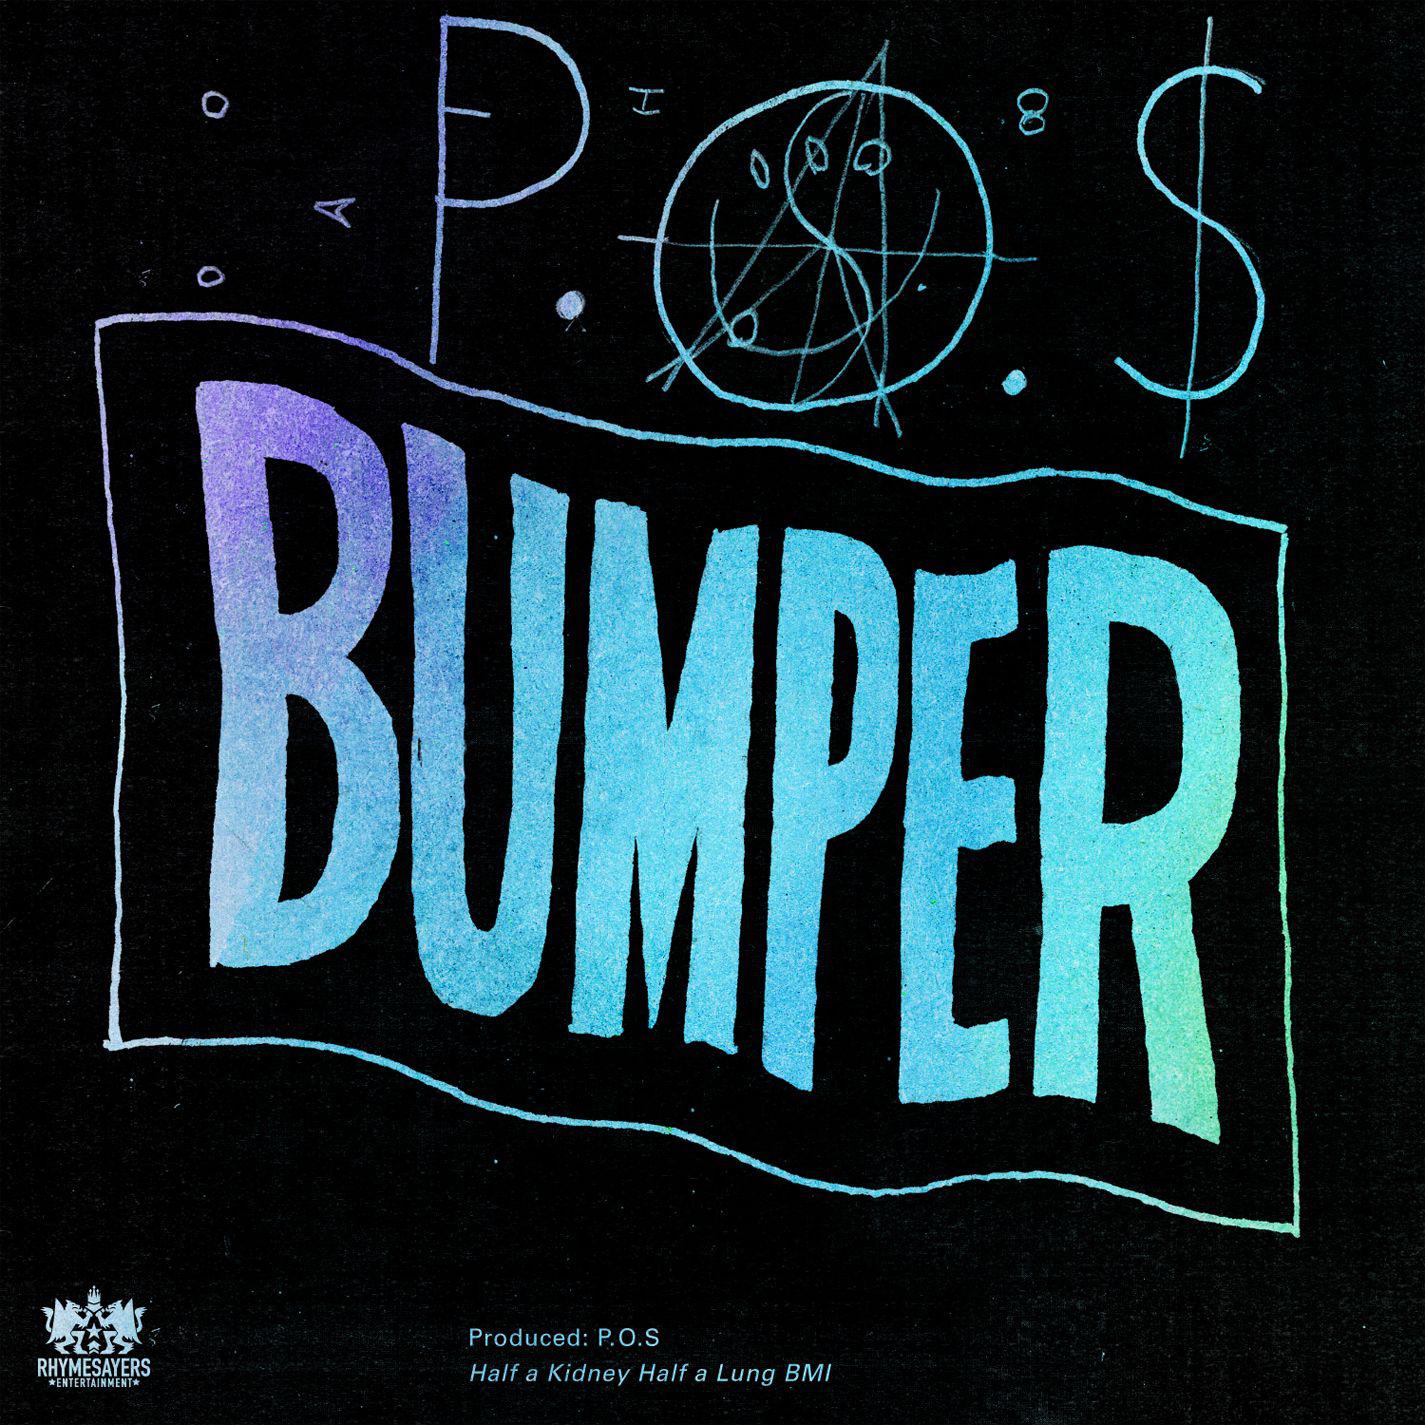 Bumper (Instrumental)